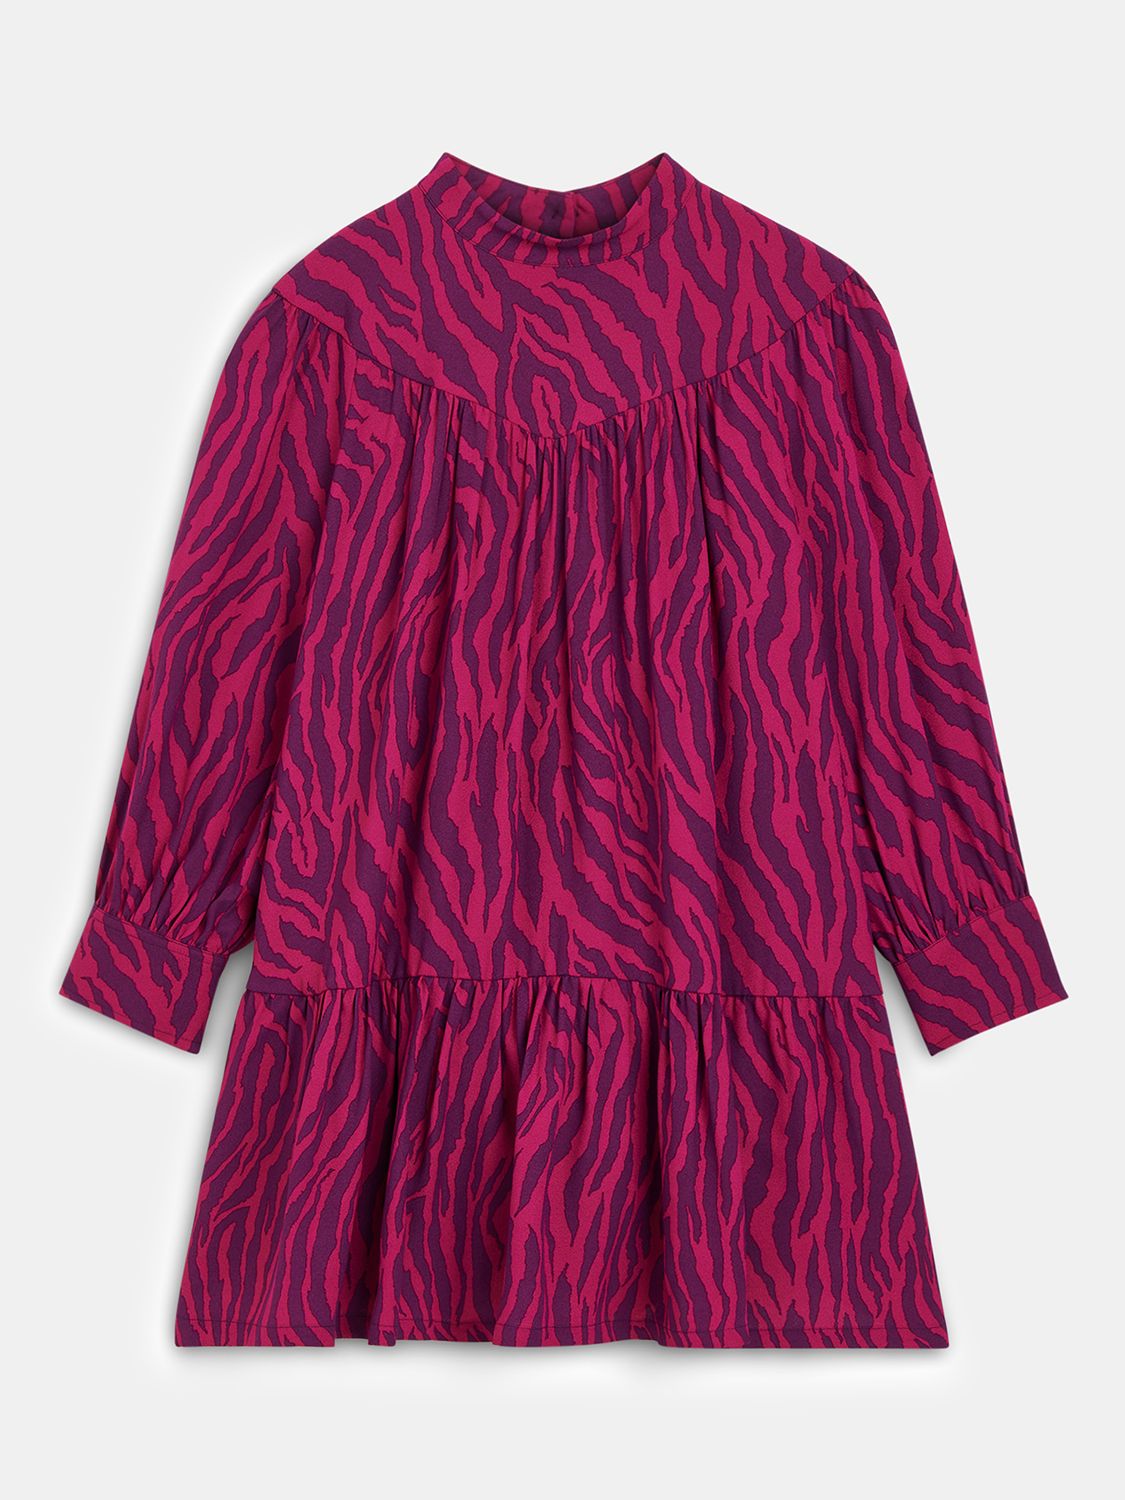 Whistles Kids' Zebra Print Swing Dress, Purple/Multi, 3-4 years